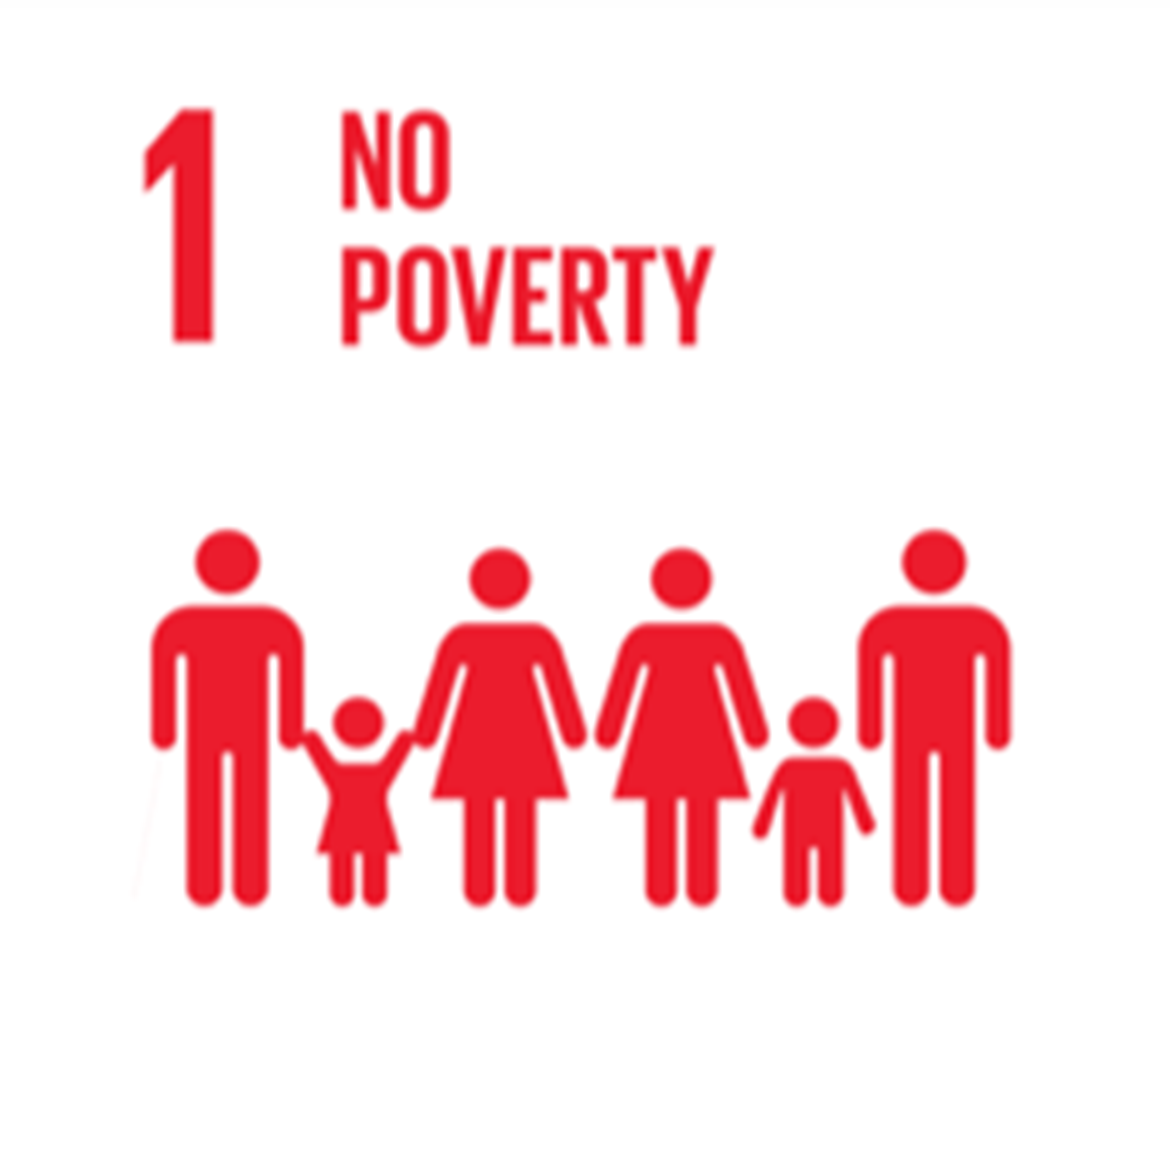 SDG 1 (No poverty) implementation in Latvia 2018